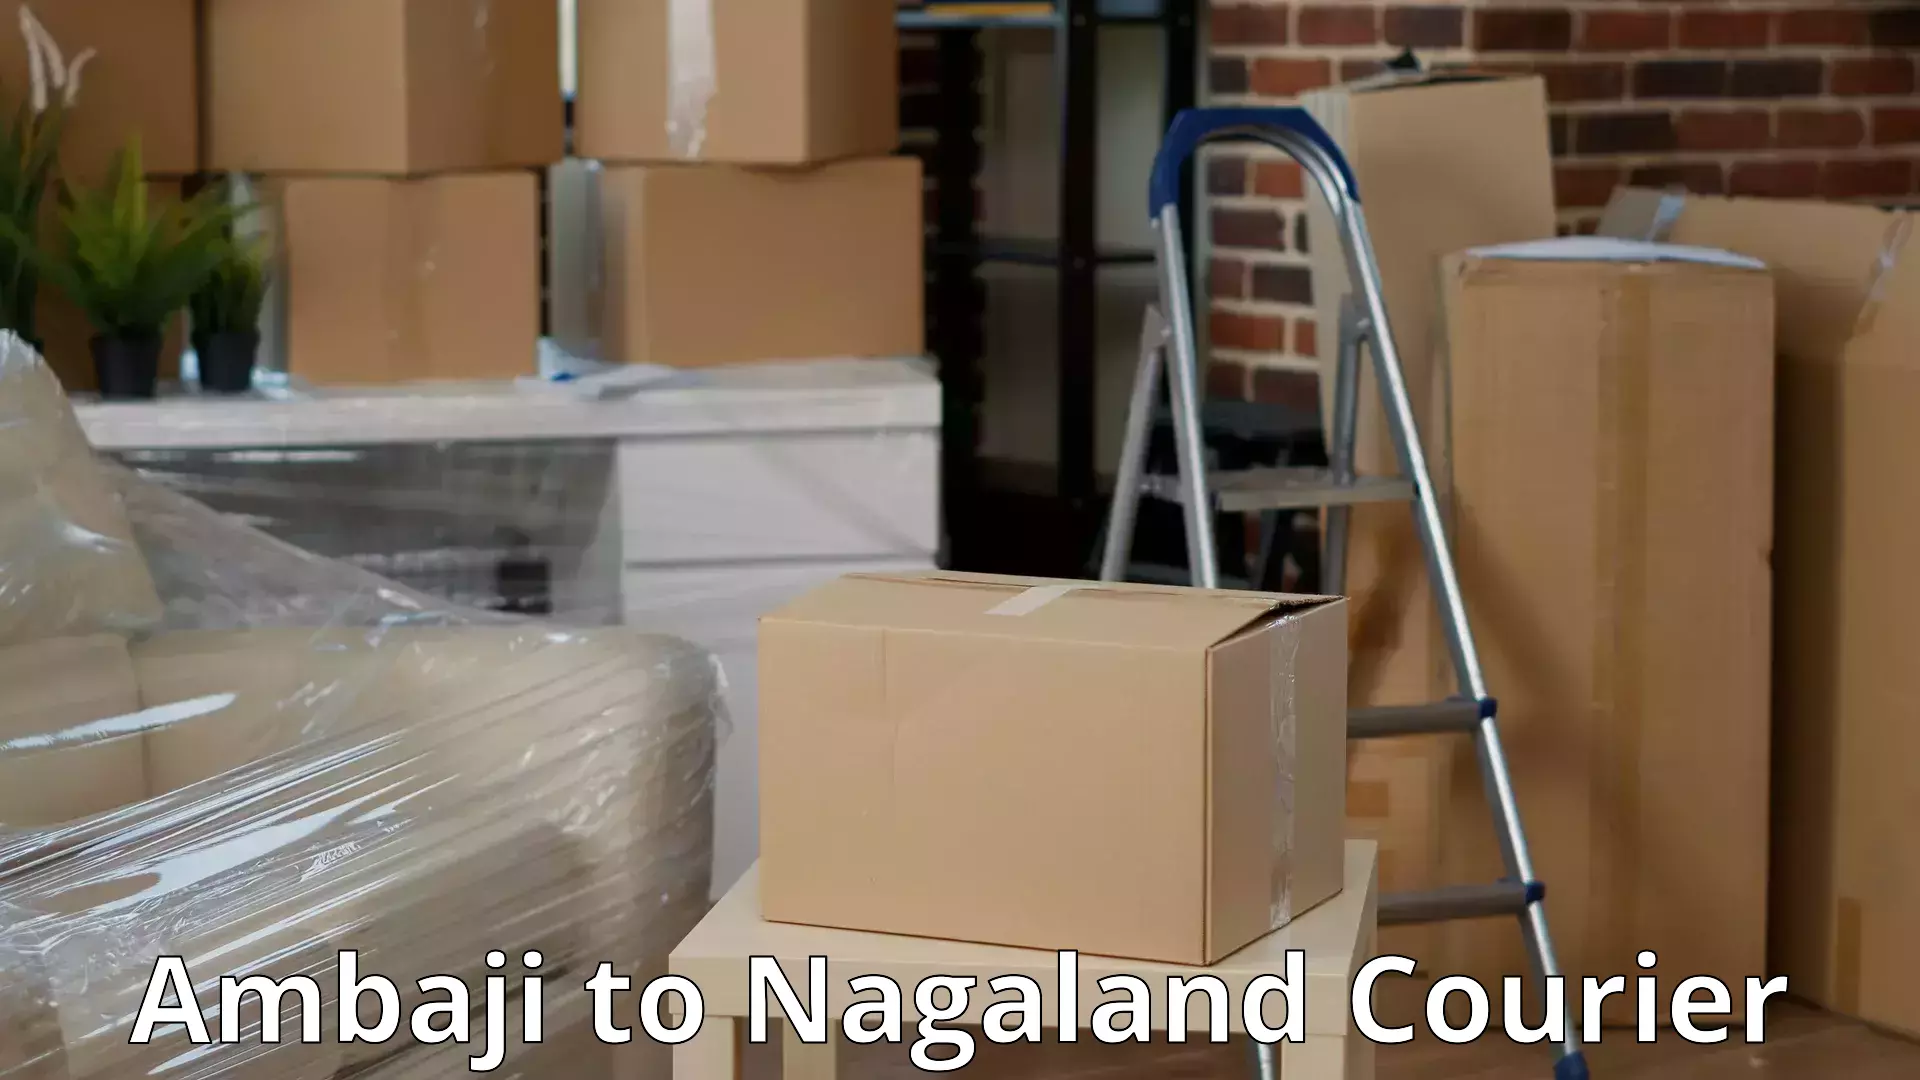 Full-service household moving in Ambaji to Nagaland